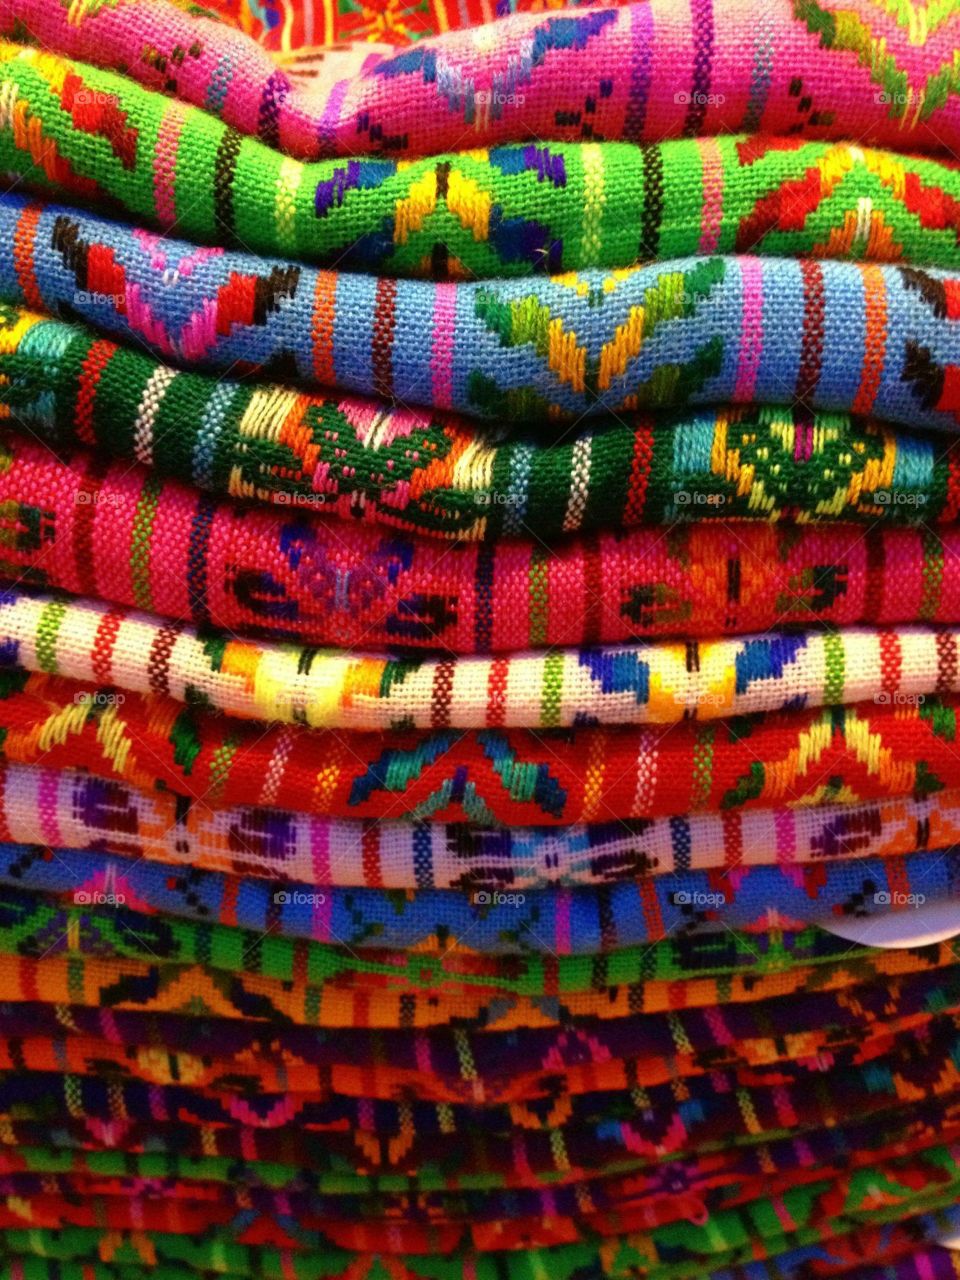 Textiles in Mexico